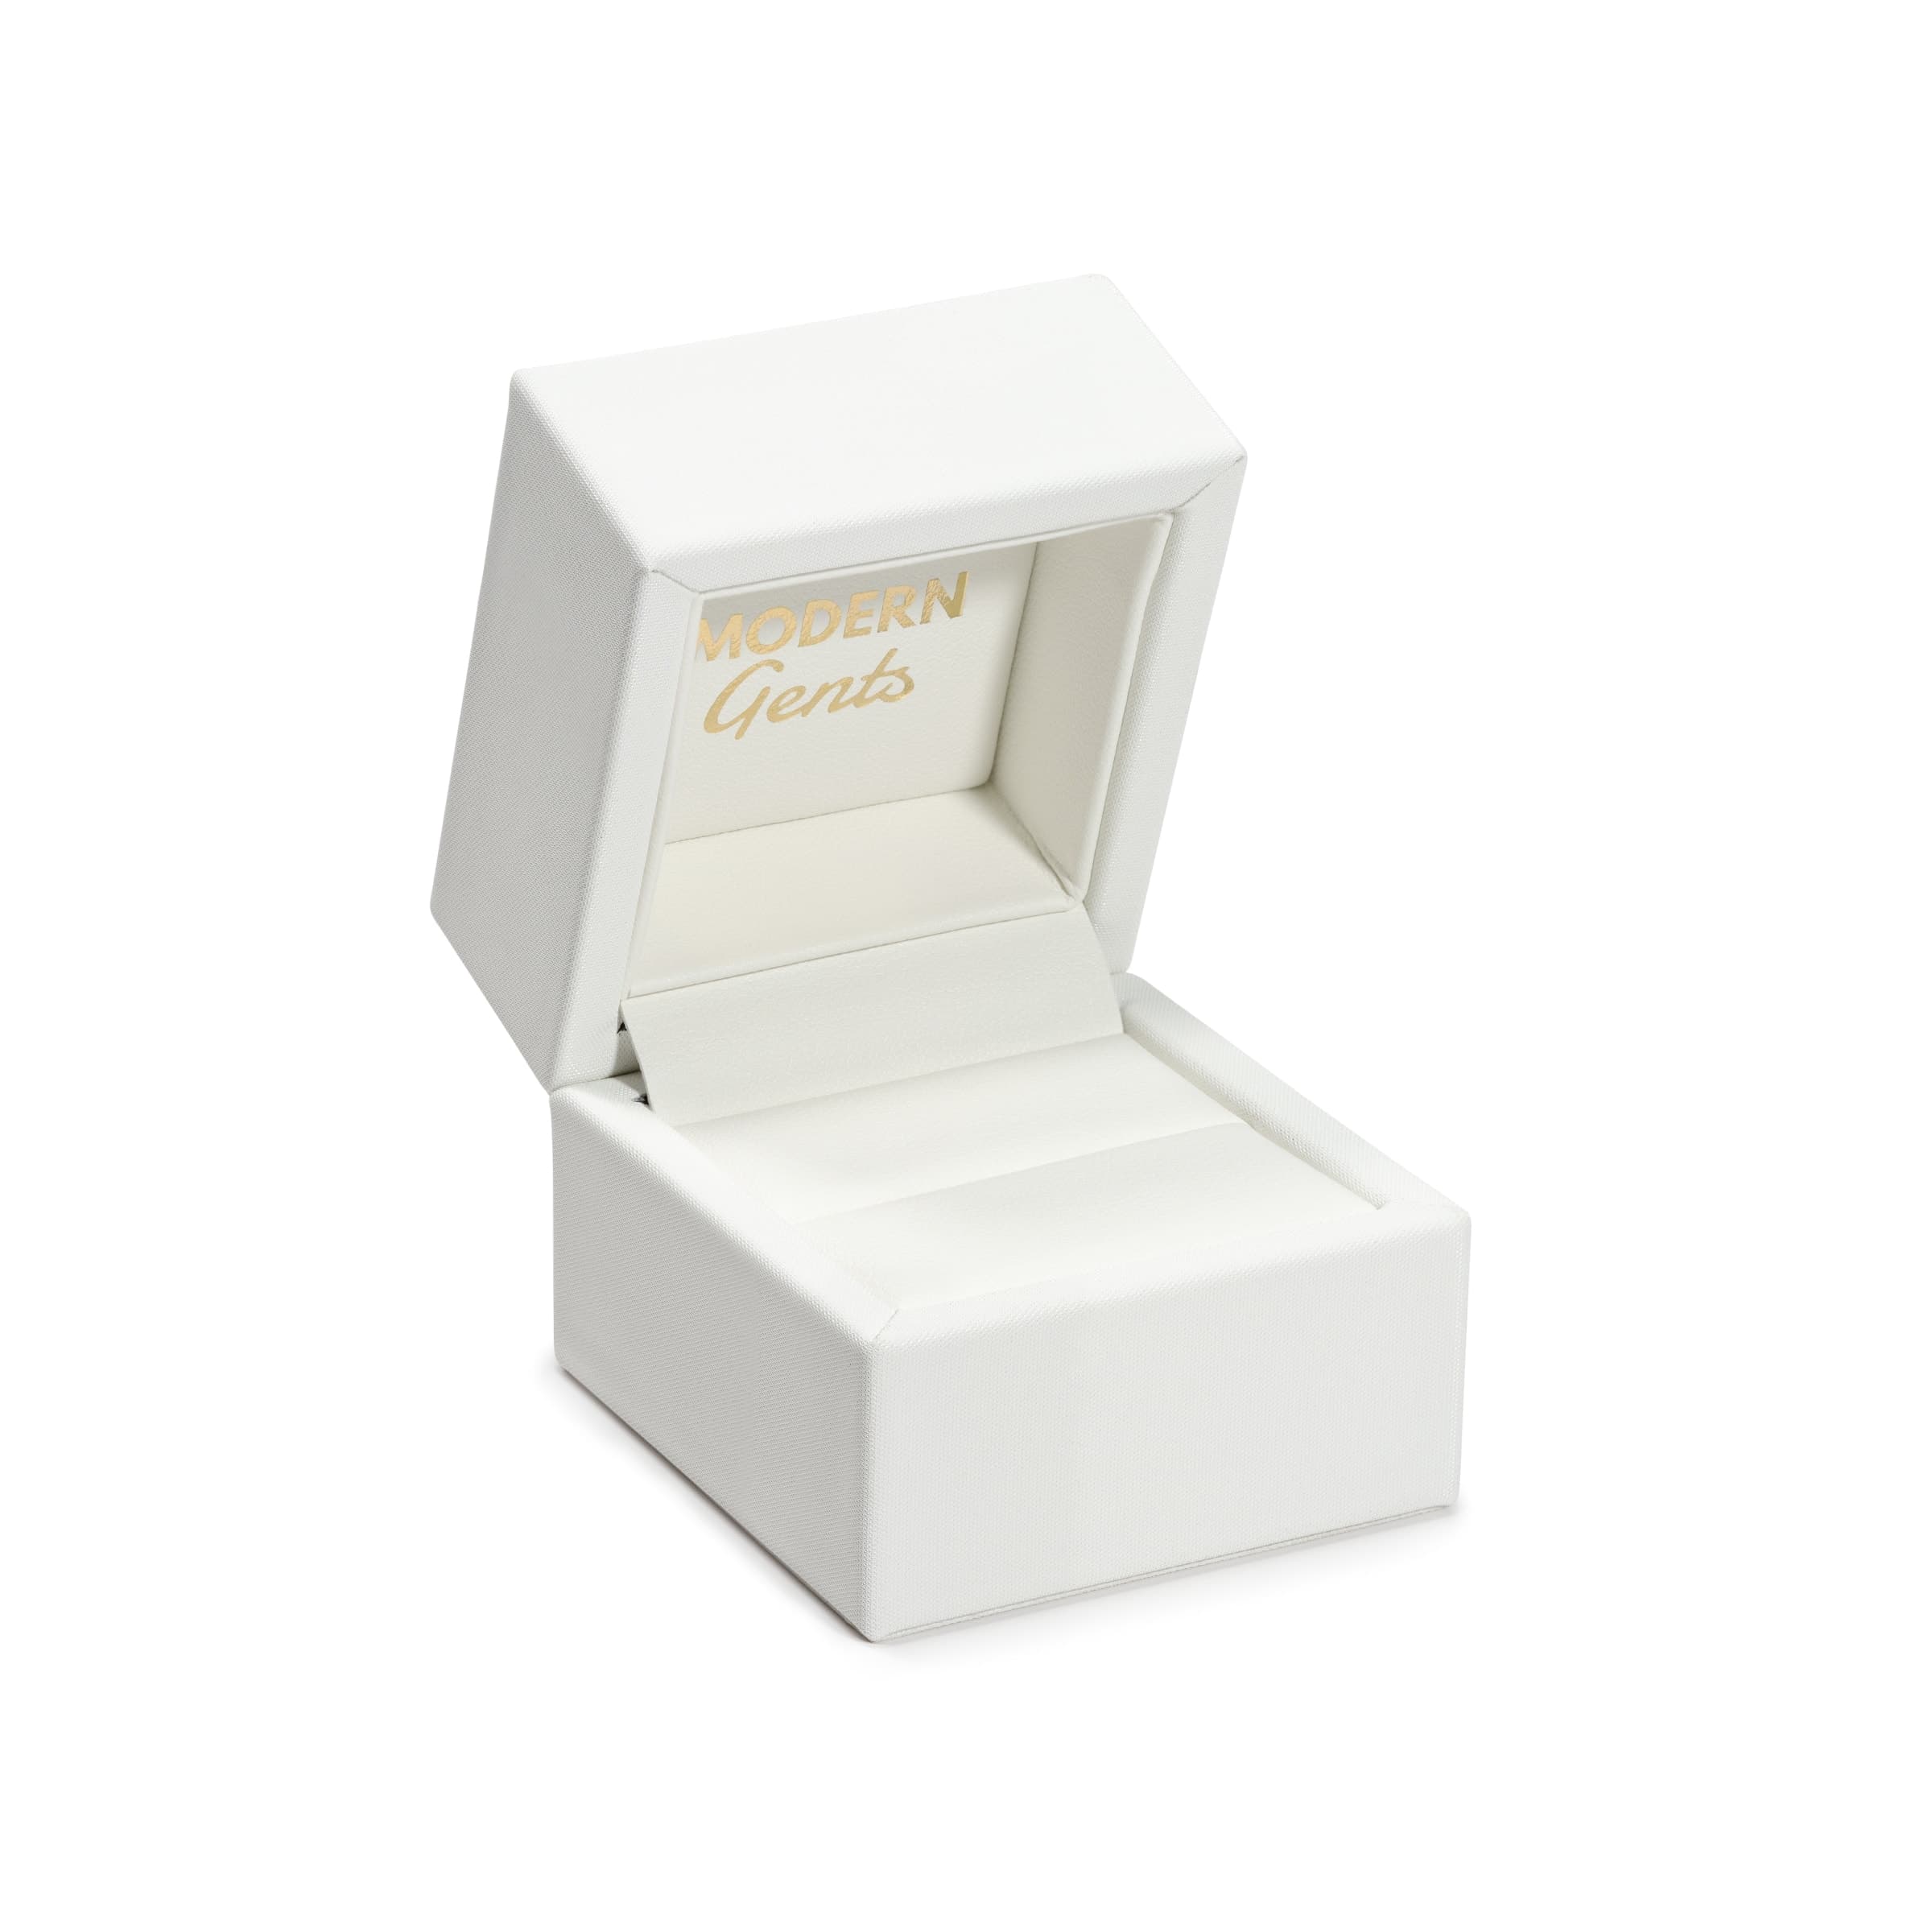 Tiffany Facets Small Jewelry Box in Tiffany Blue® Leather | Tiffany & Co.